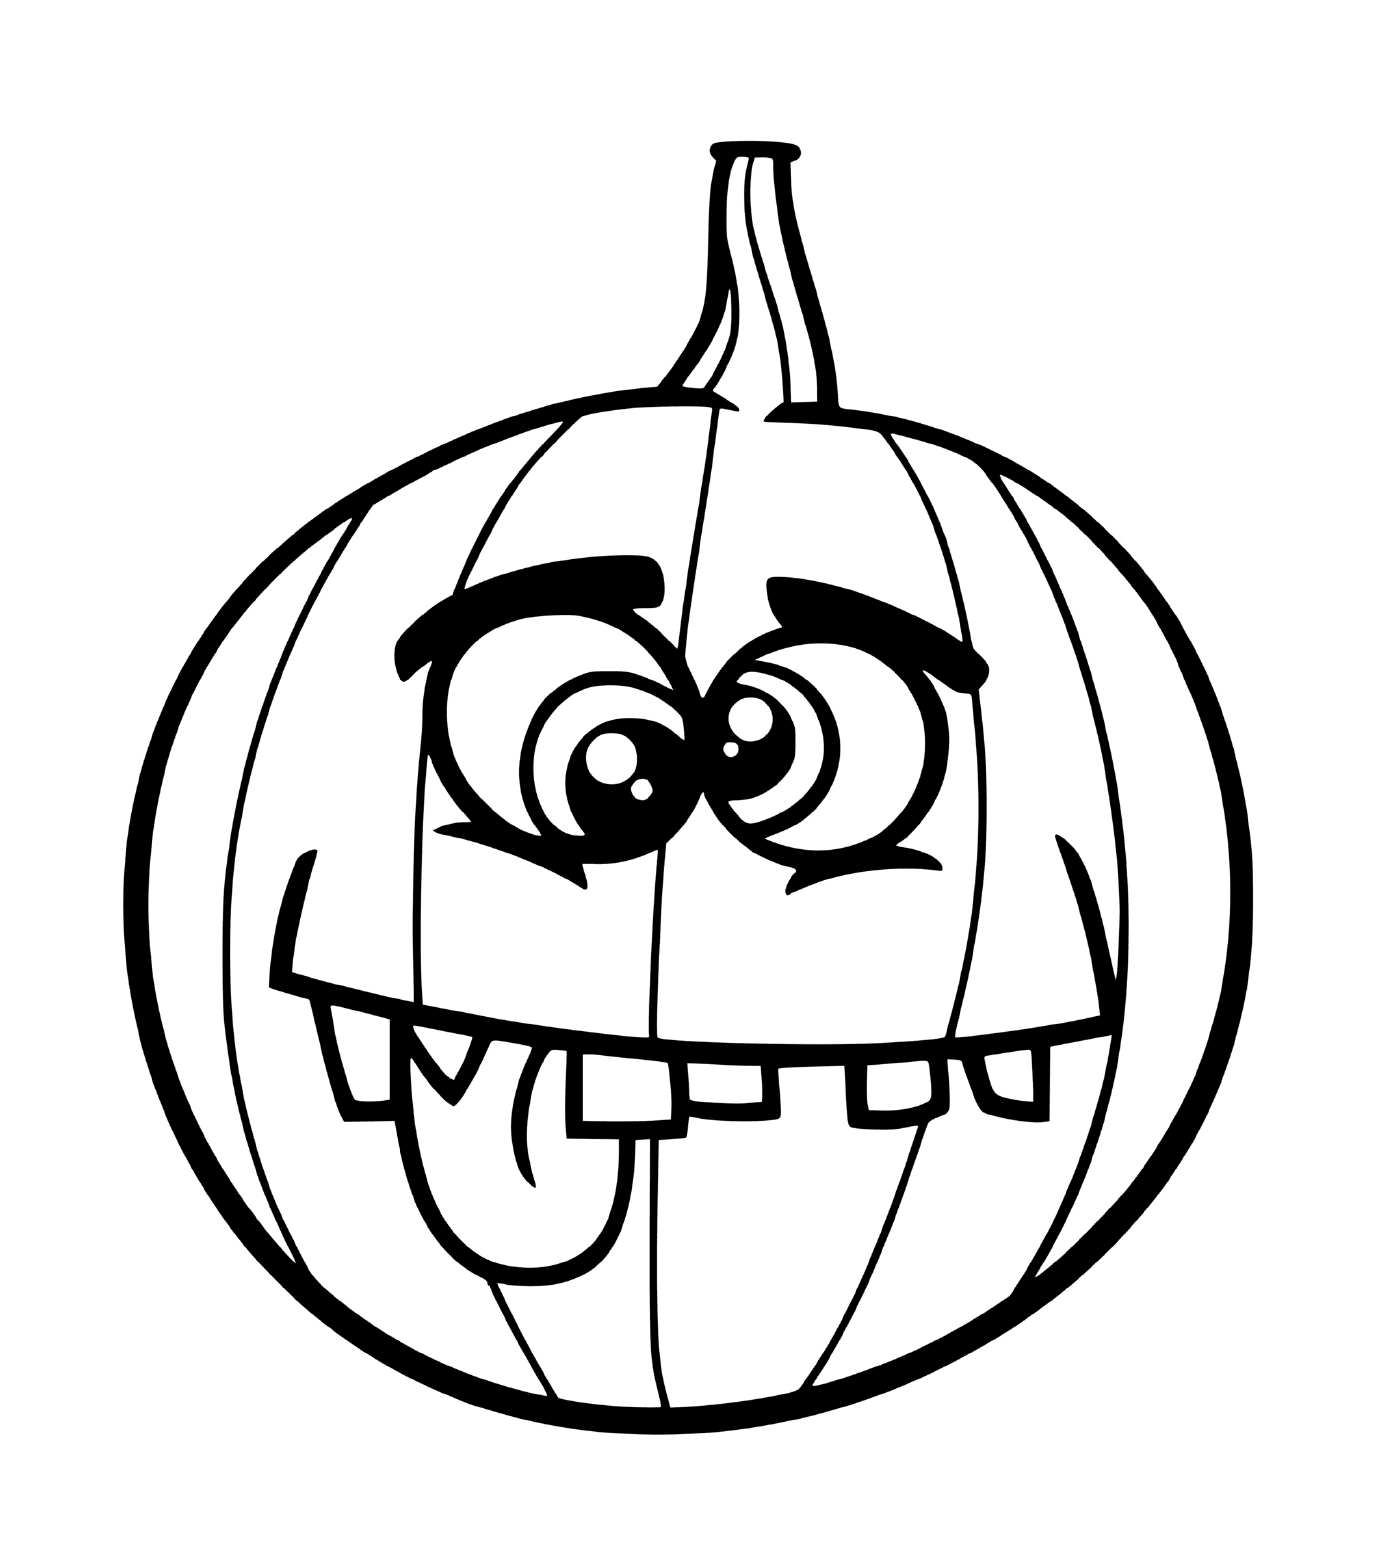  Fun pumpkin with a face 